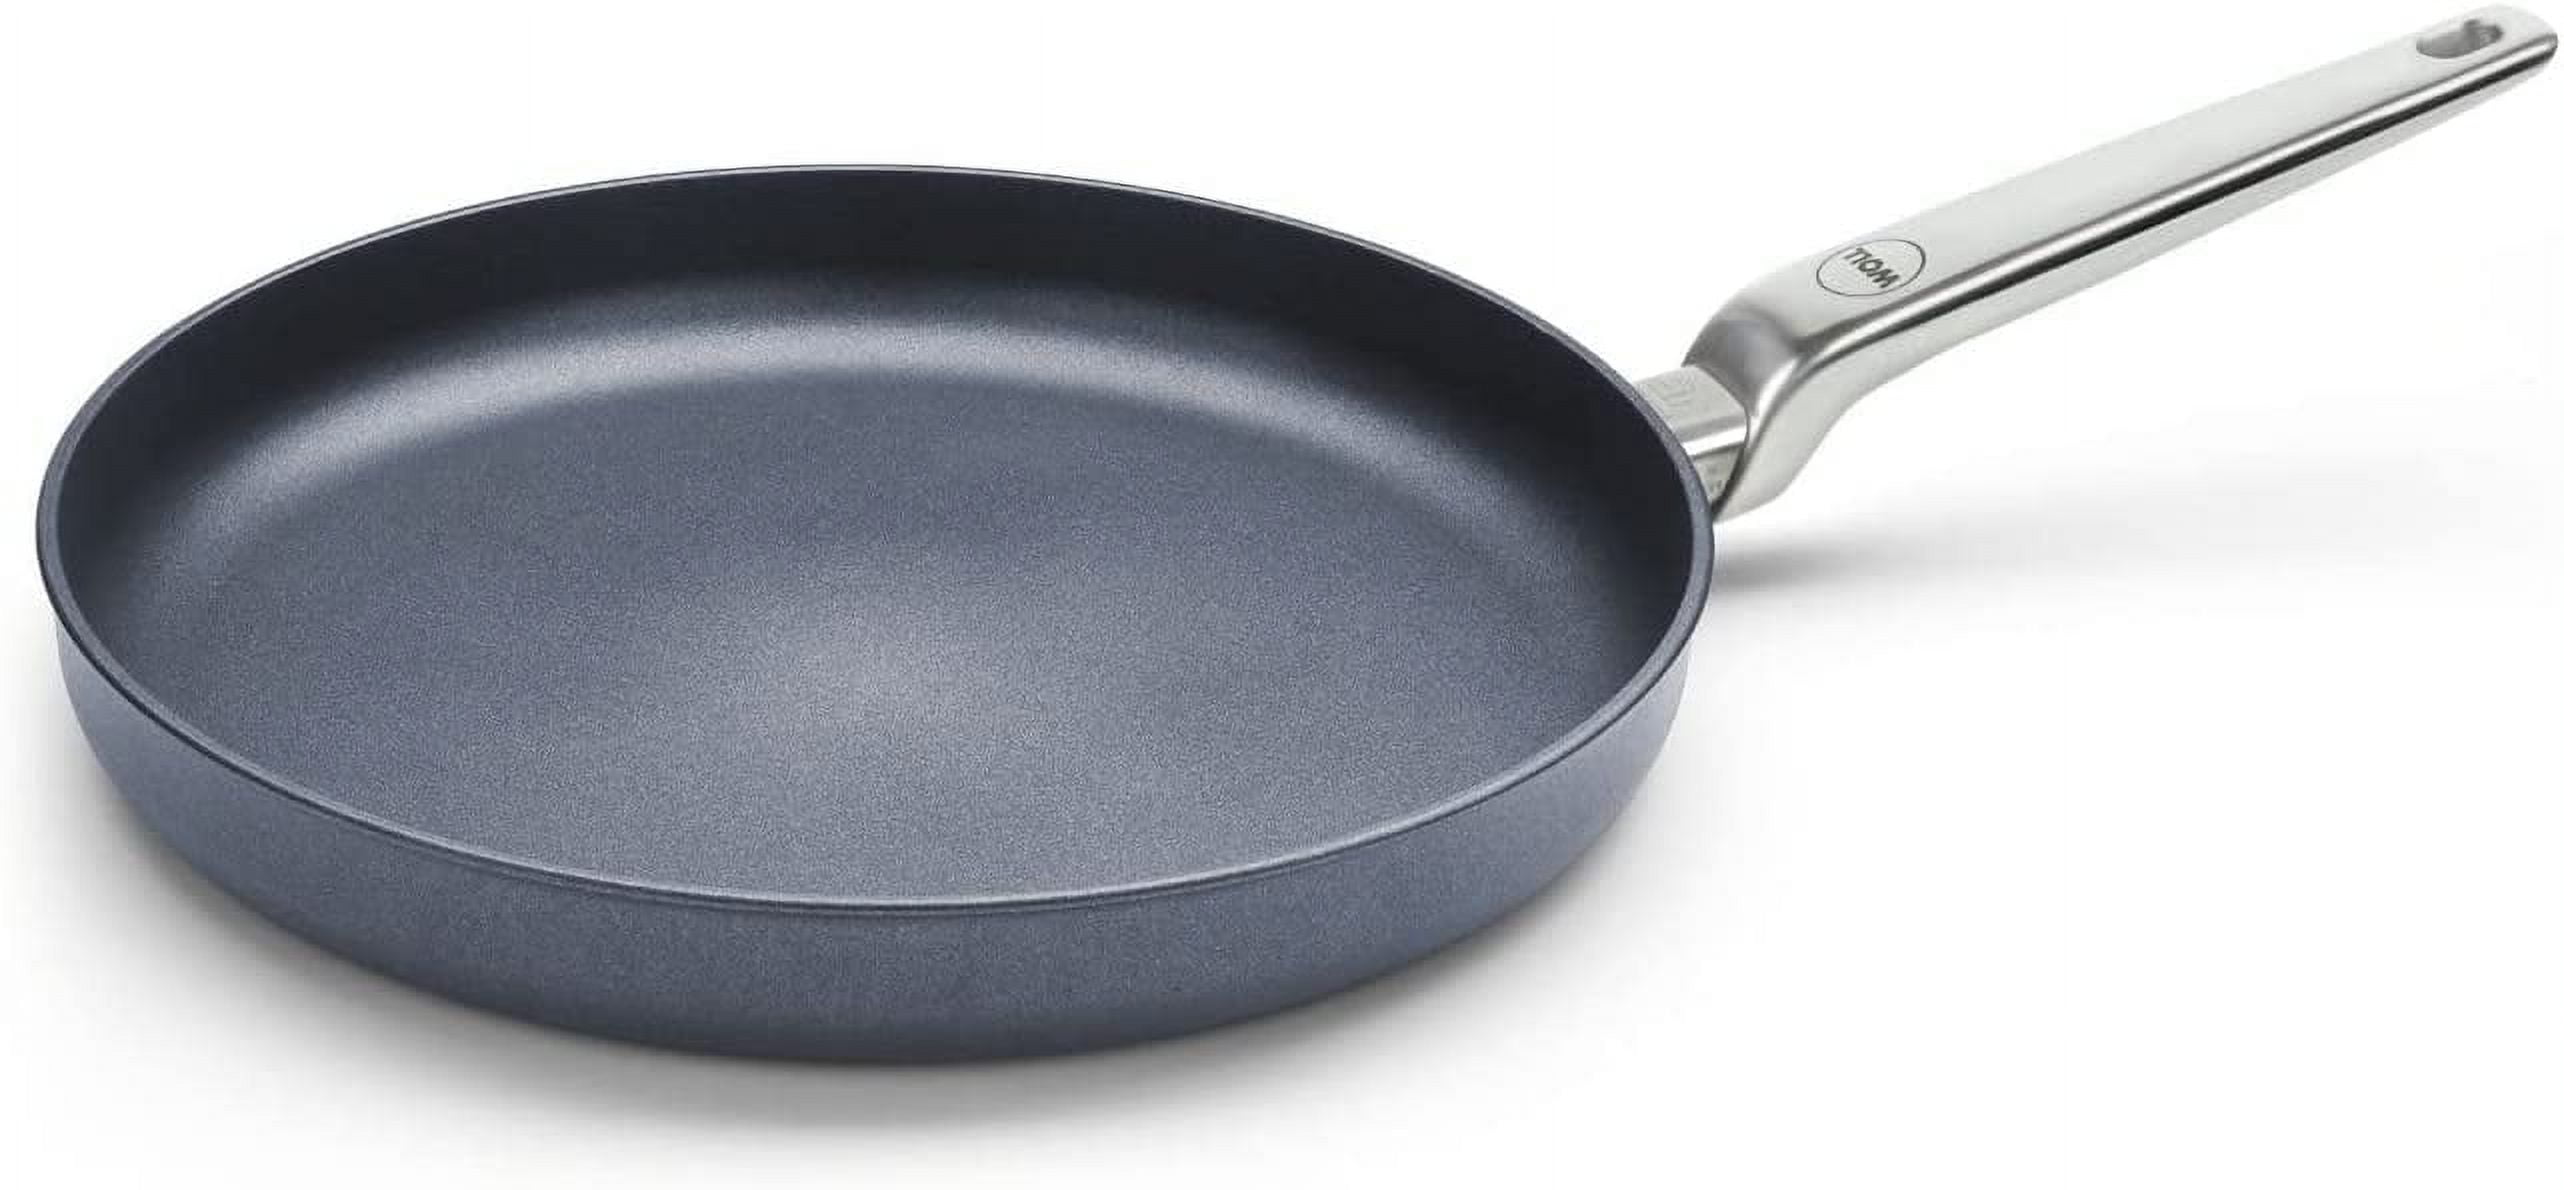 Shallow Non Stick Frying Pan, 'Diamond Lite' by WOLL